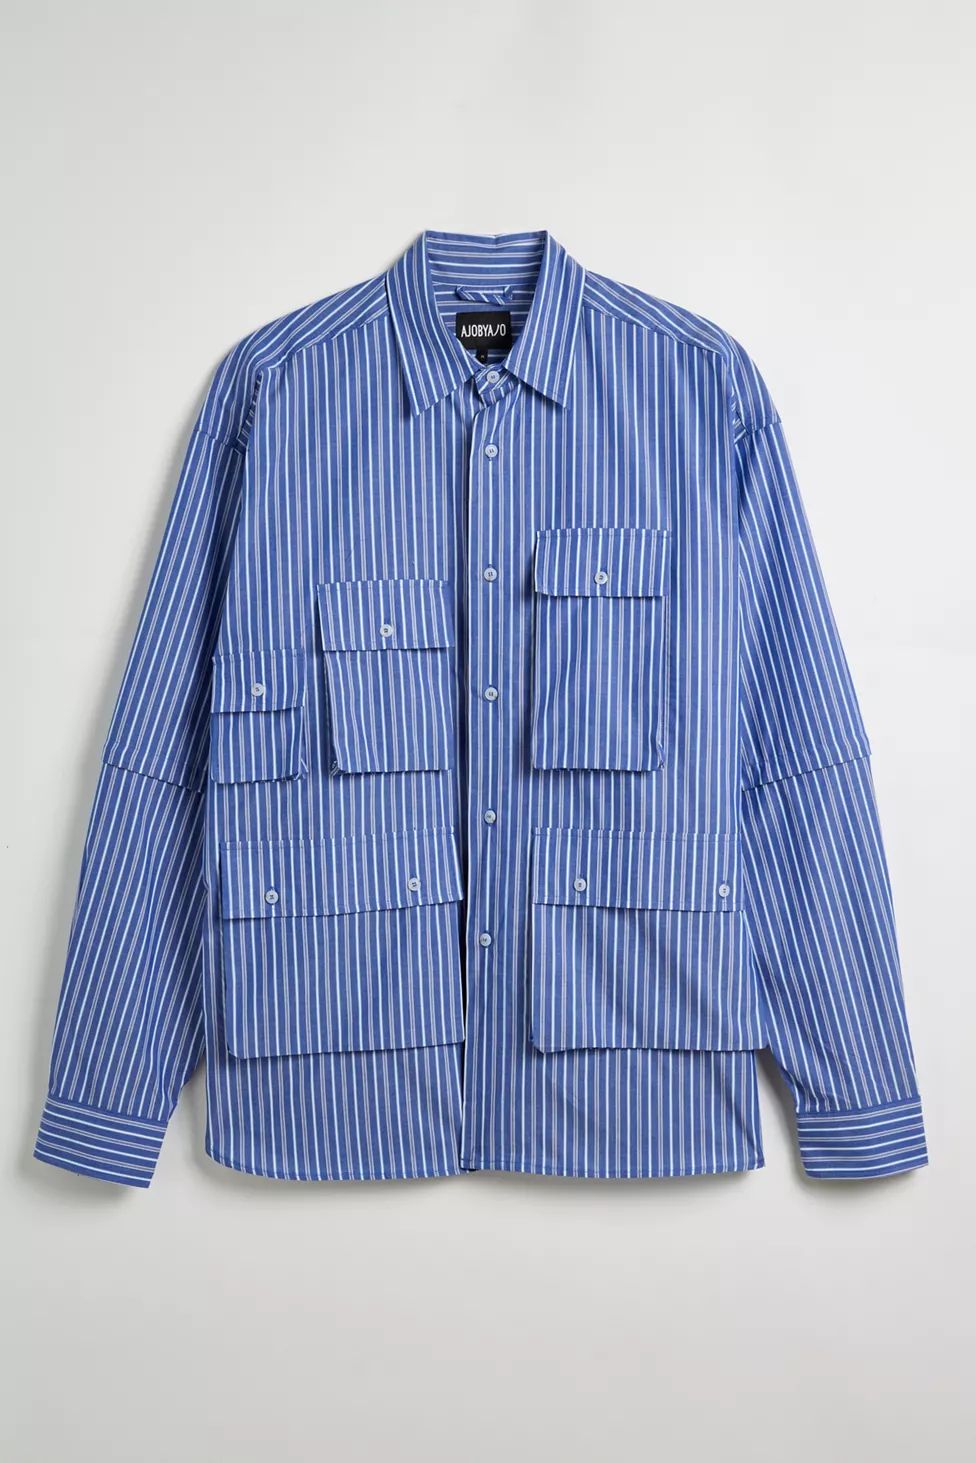 AJOBYAJO Fisherman Stripe Shirt | Urban Outfitters (US and RoW)